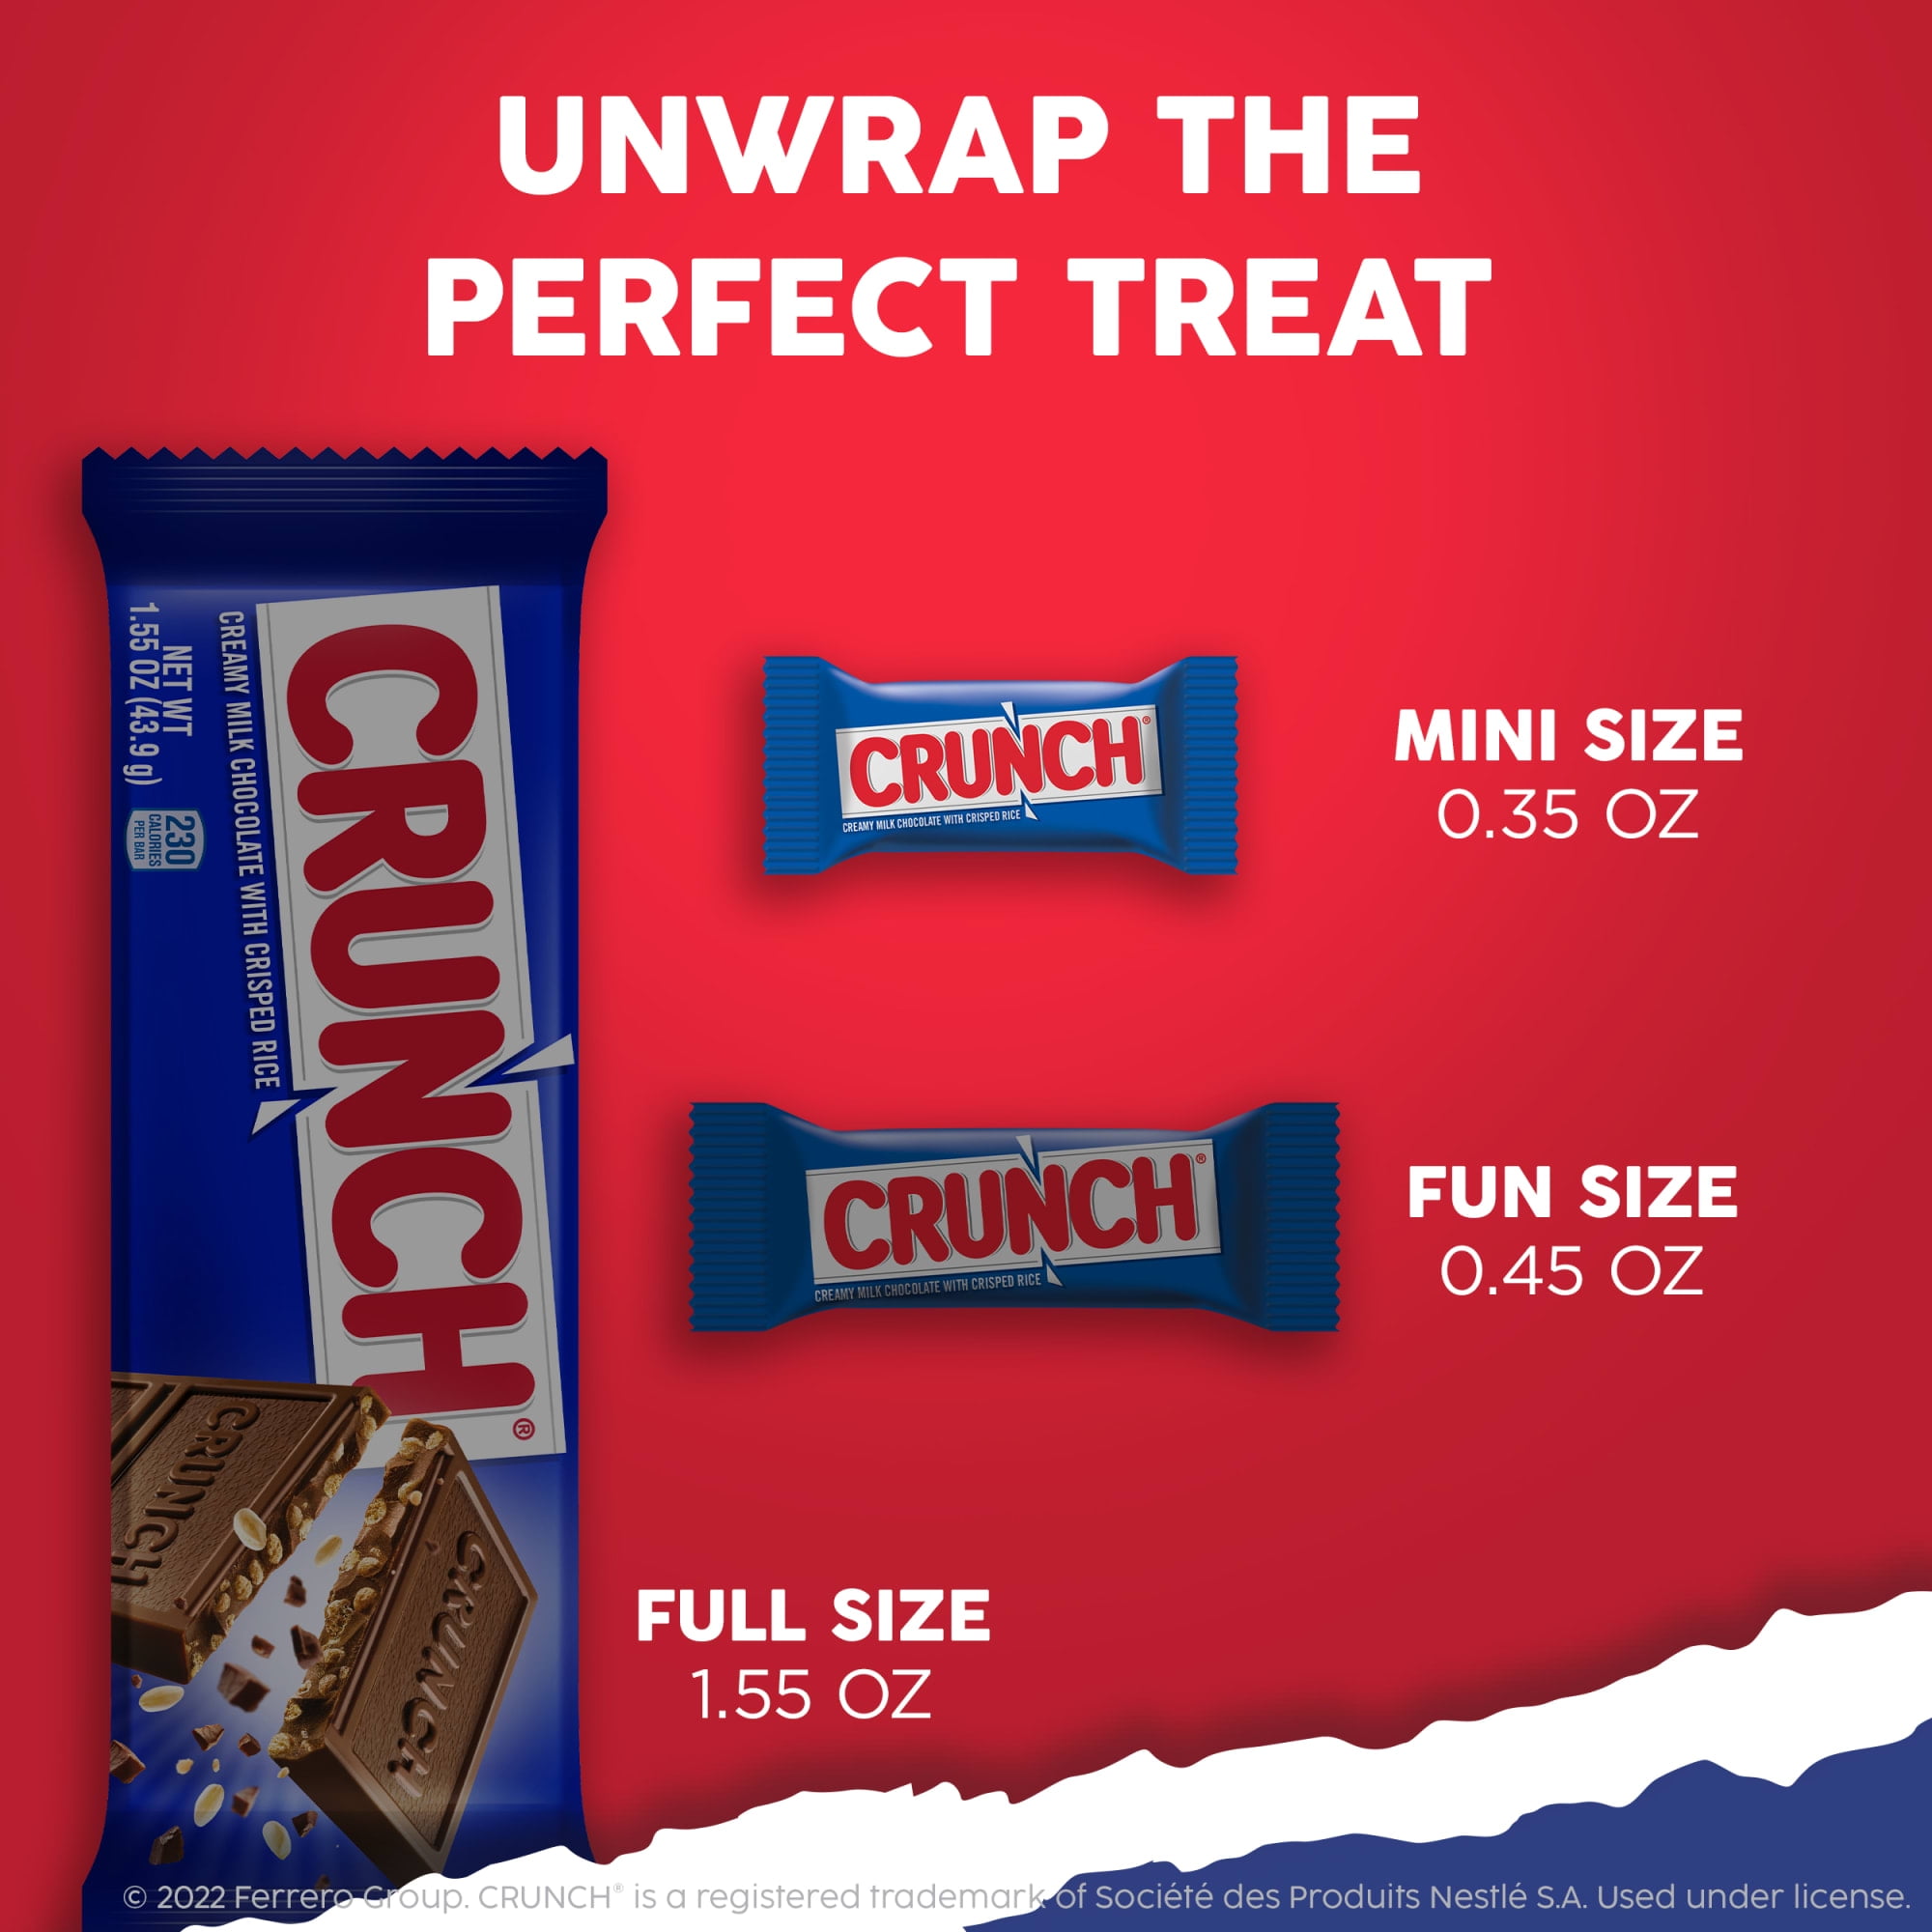 Crunchy Mint Chocolate Candy Sharing Size Bag, 8 Oz.